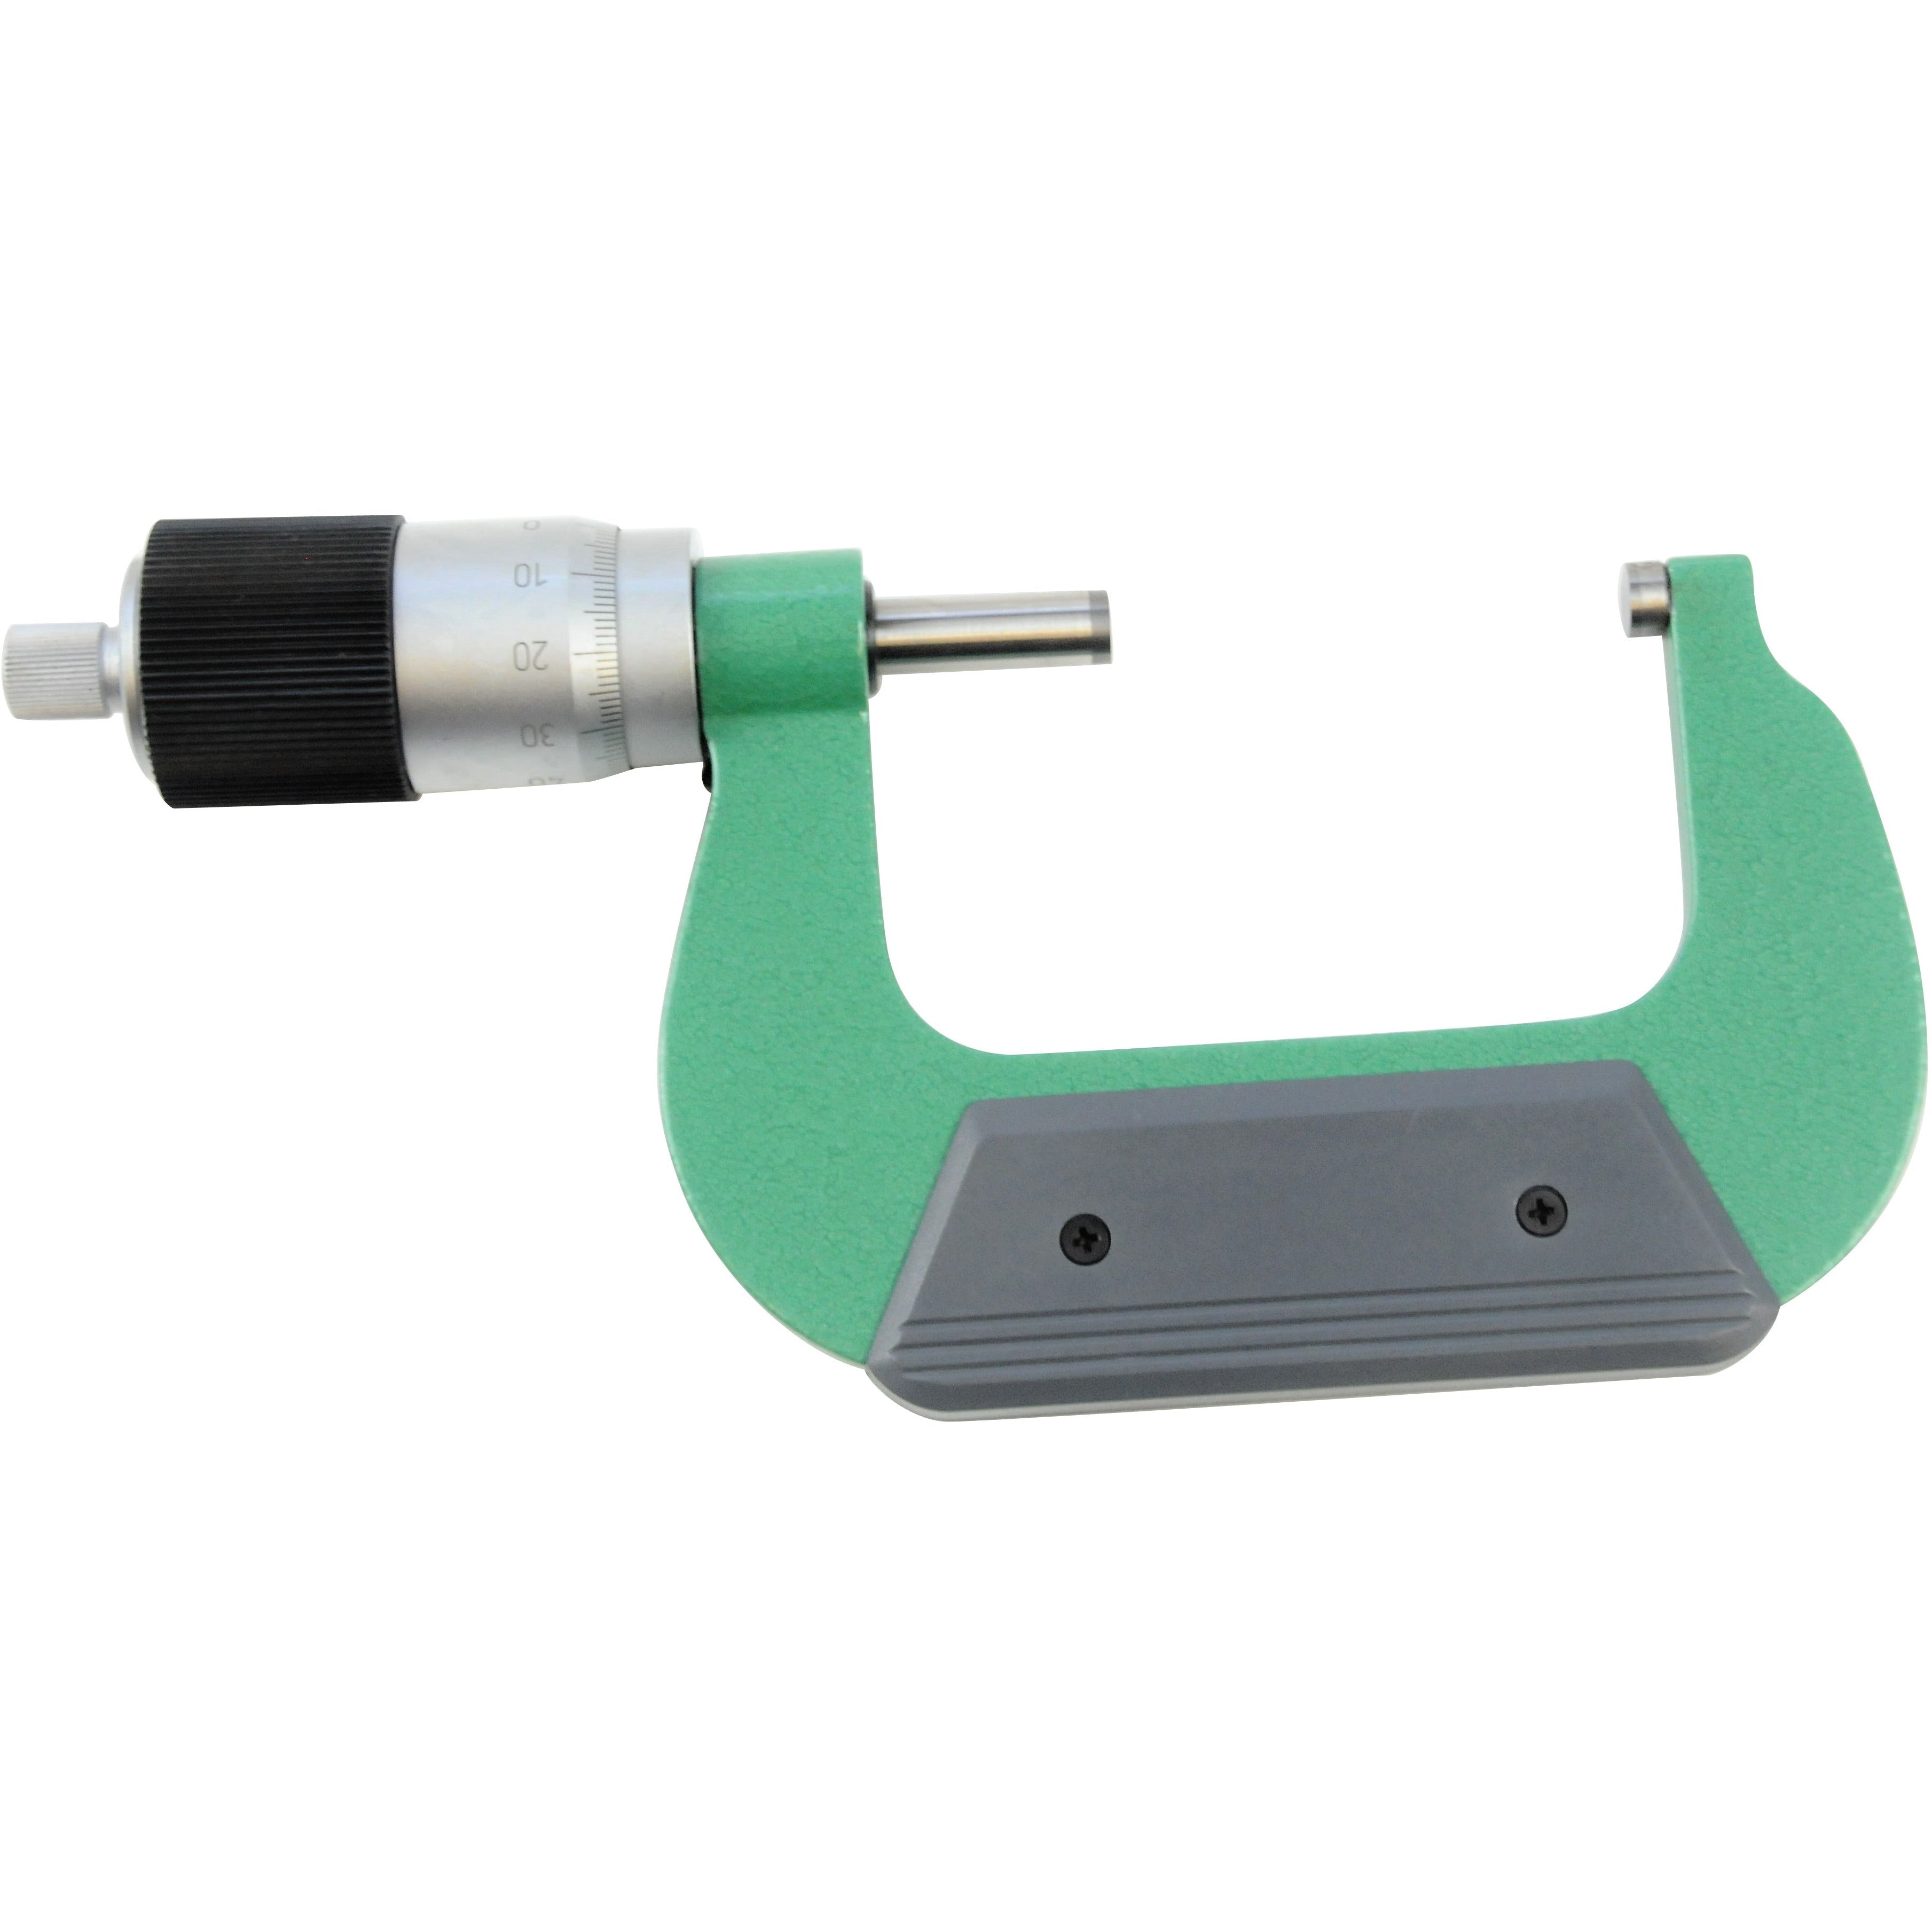 Insize Outside Micrometer Quick Feeding 3208-75B 50-75mm